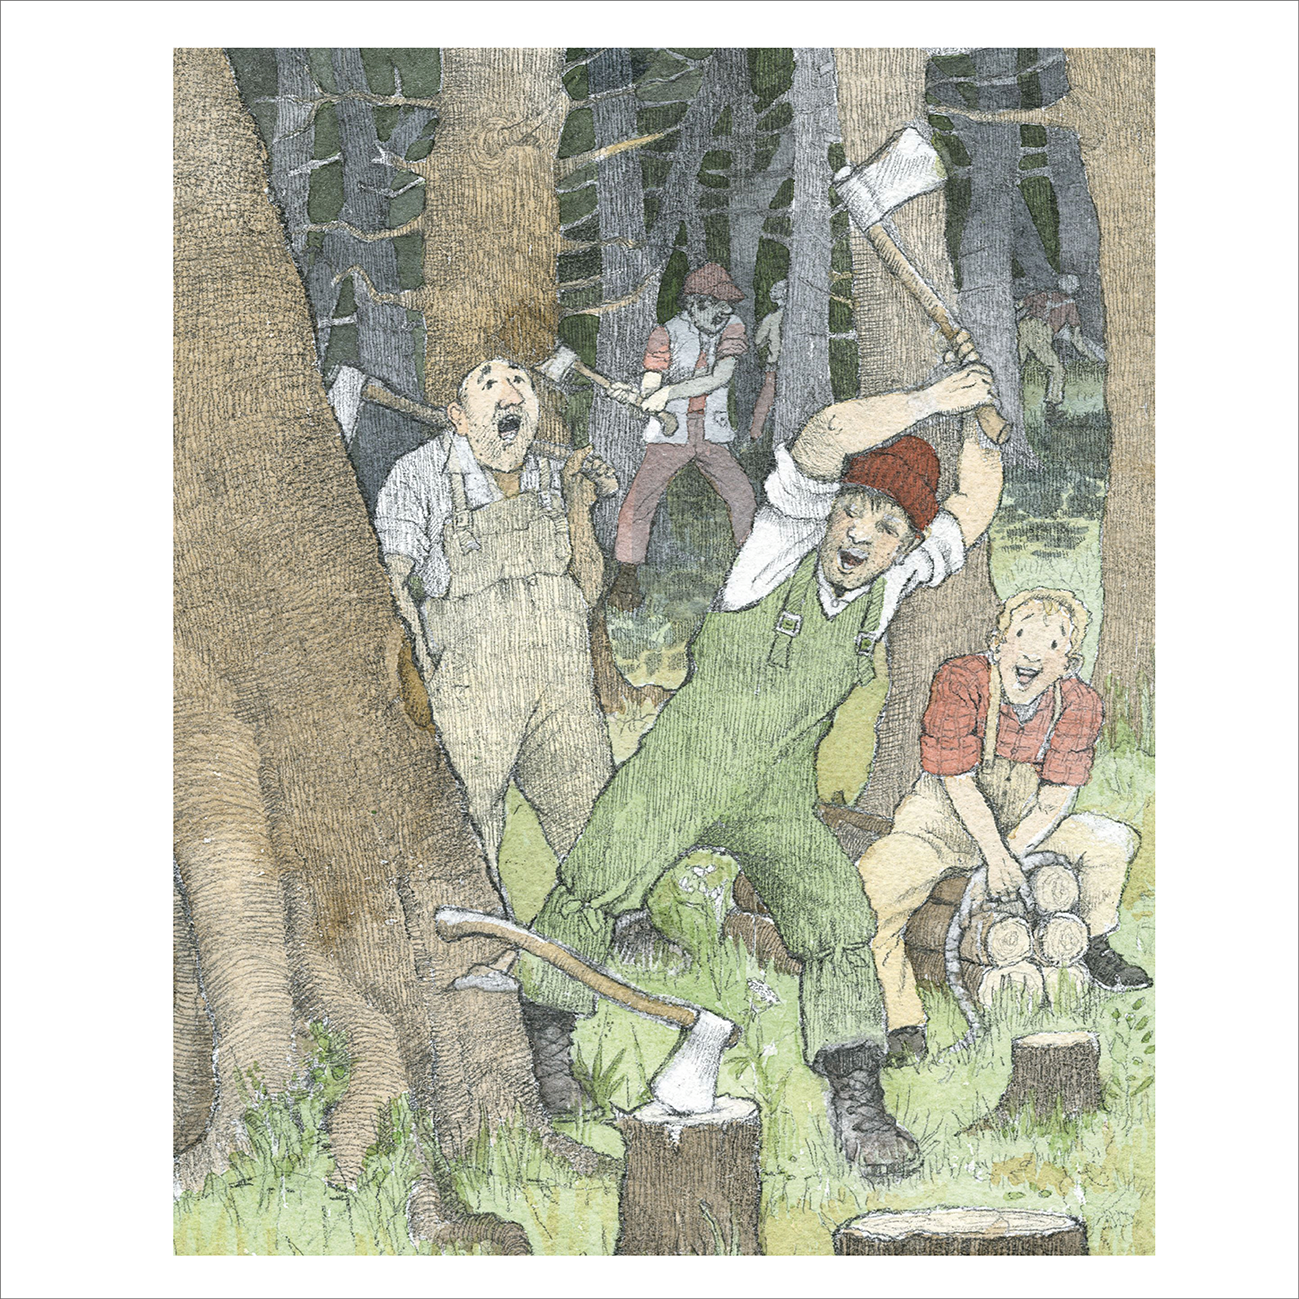 Red Riding Hood - Helen Oxenbury / Beatrix Potter